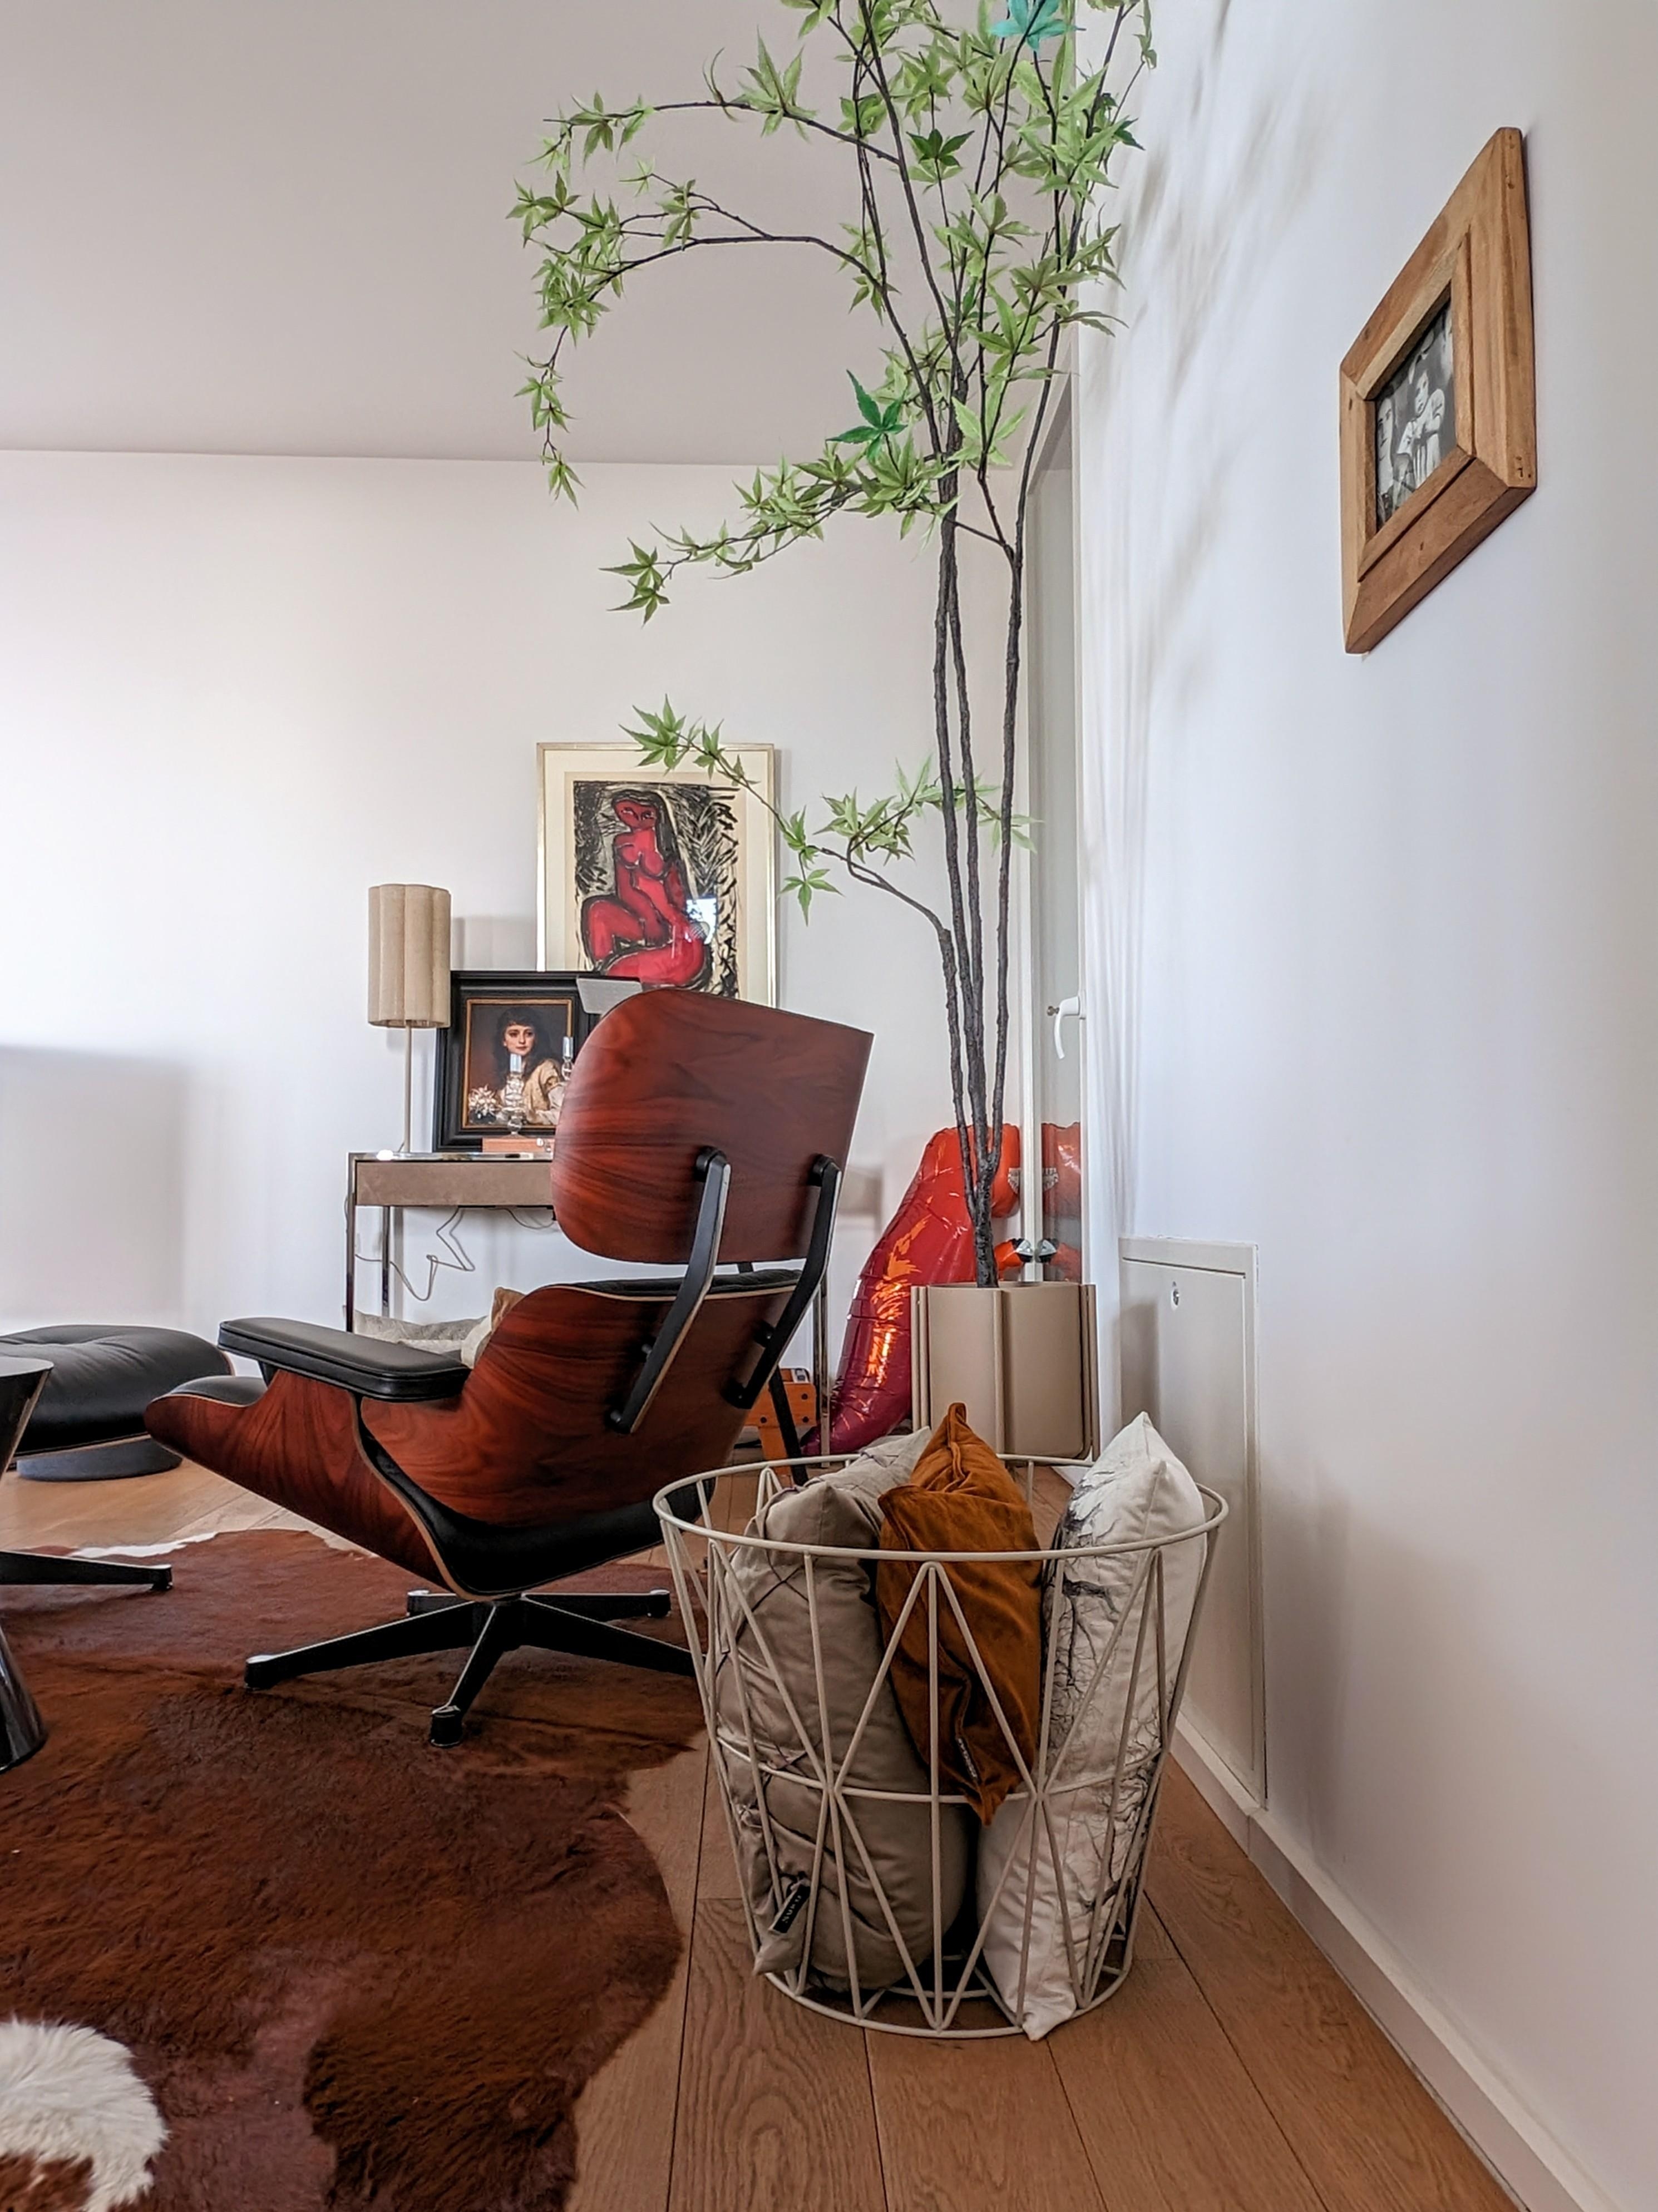 #loungechair #interiordesign #interiordesigner #homesweethome